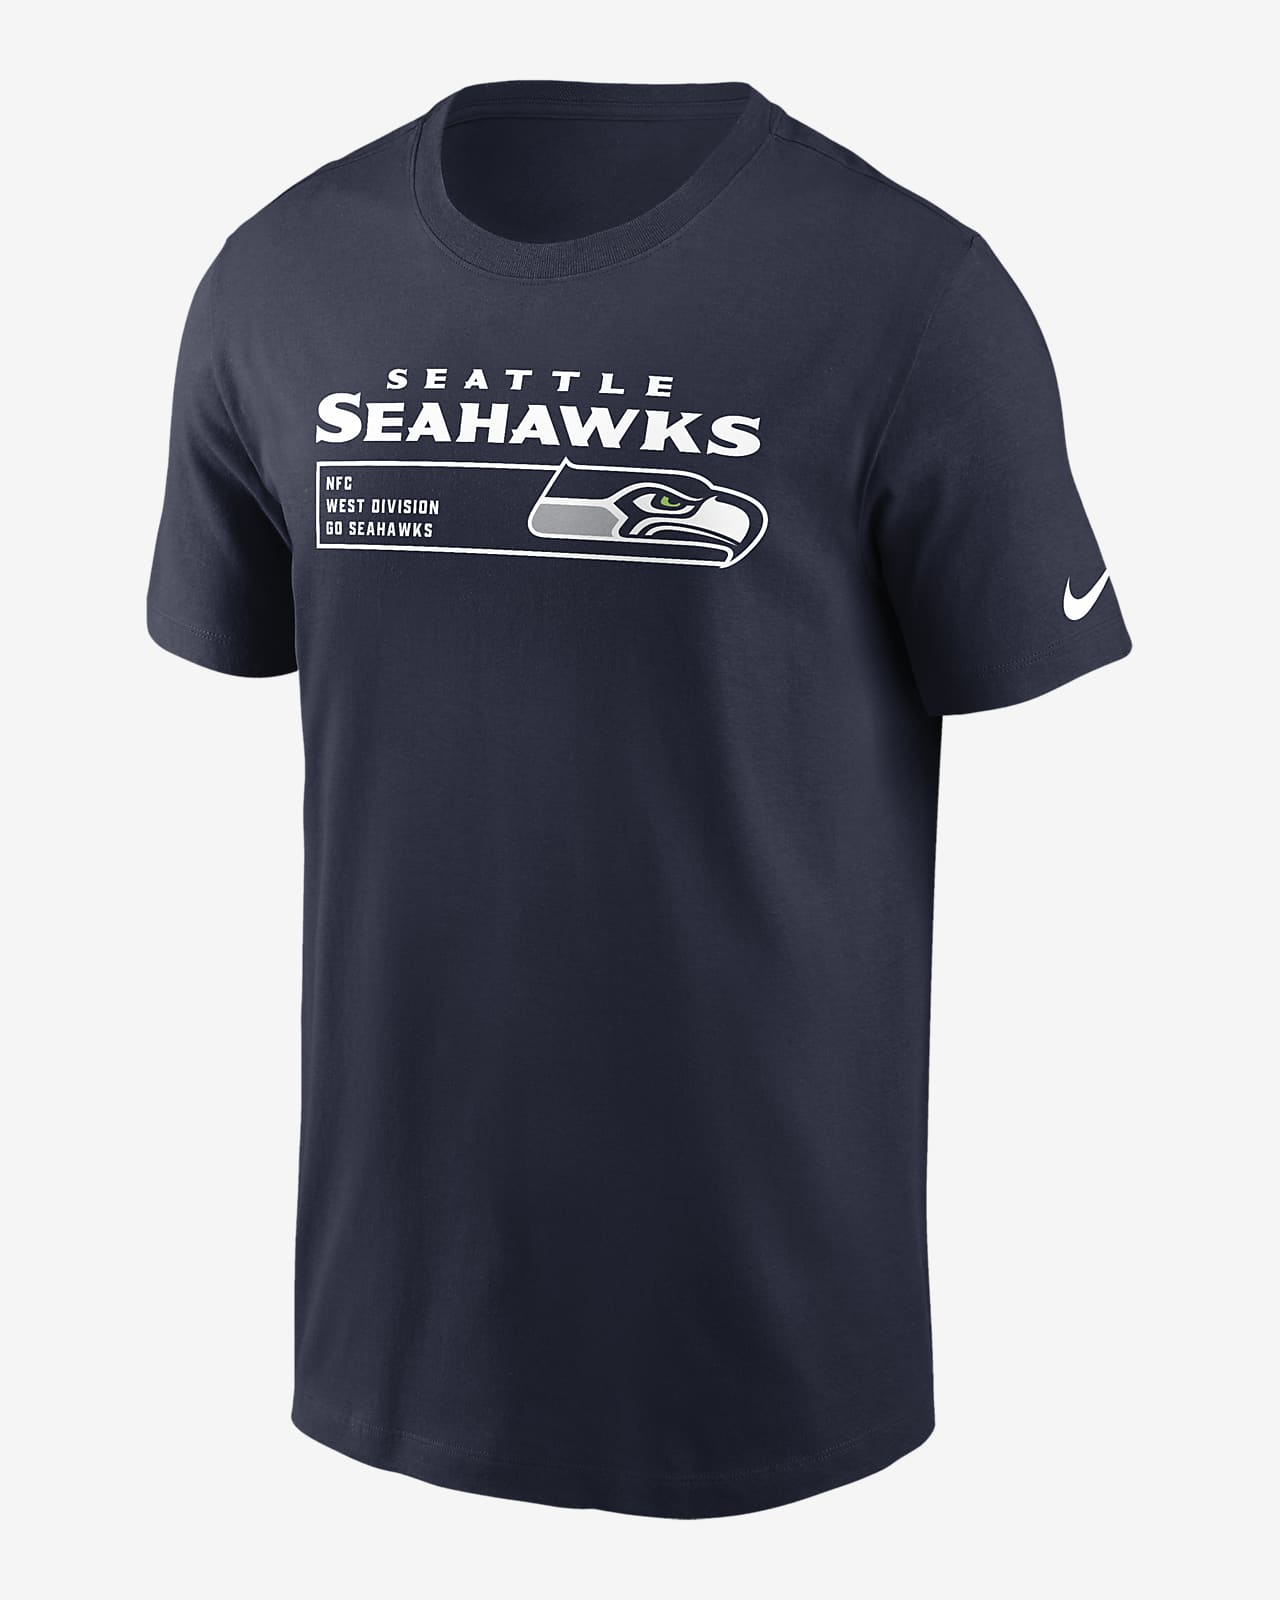 Seattle Seahawks Division Essential Men's Nike NFL T-Shirt